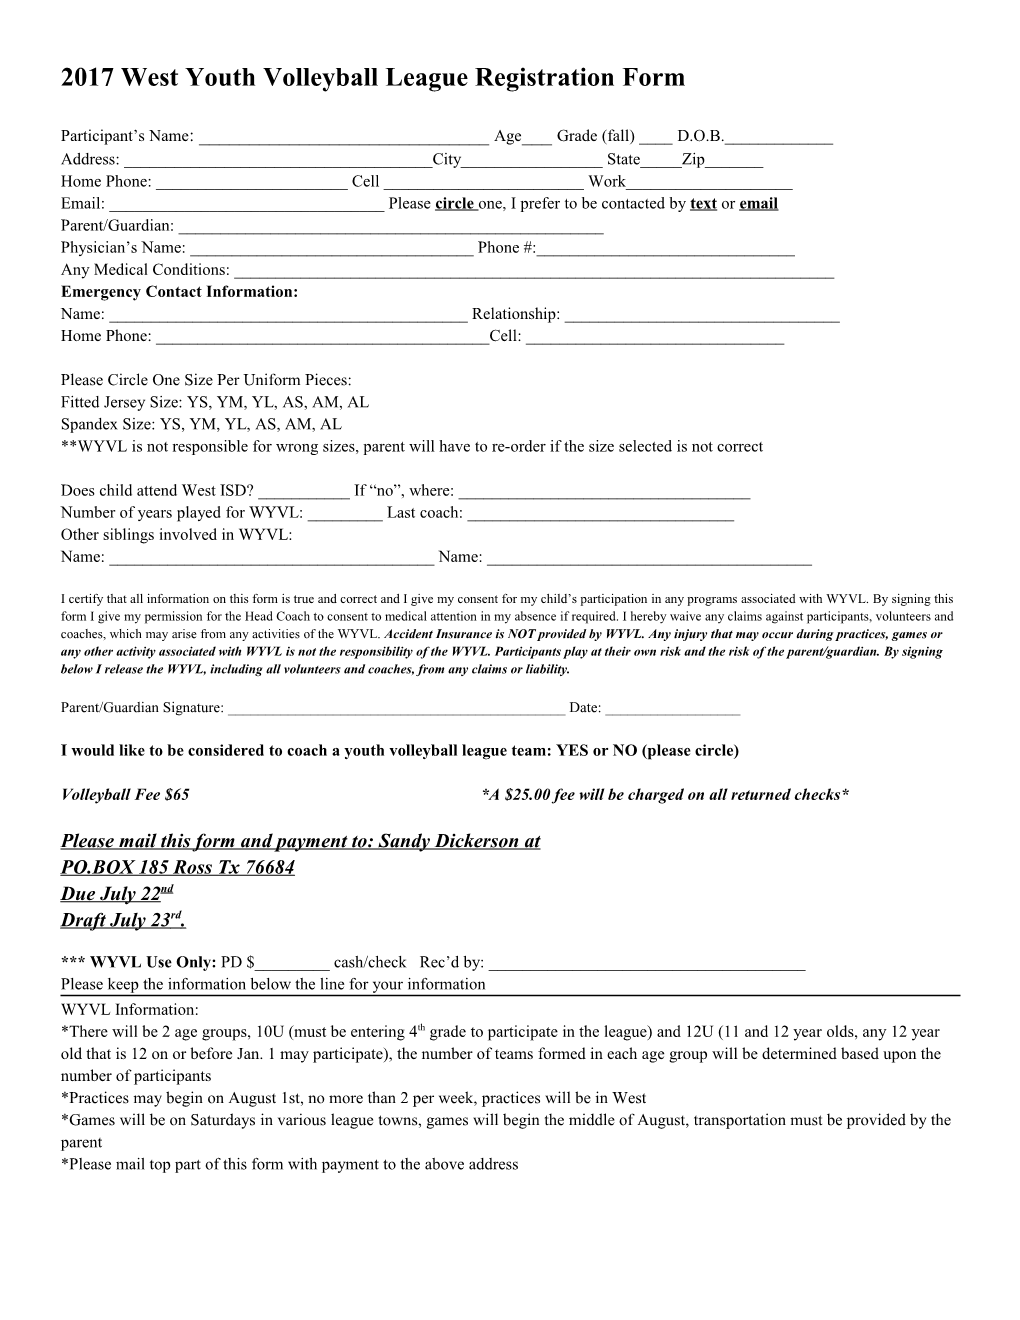 2010 WWFL Football Registration Form